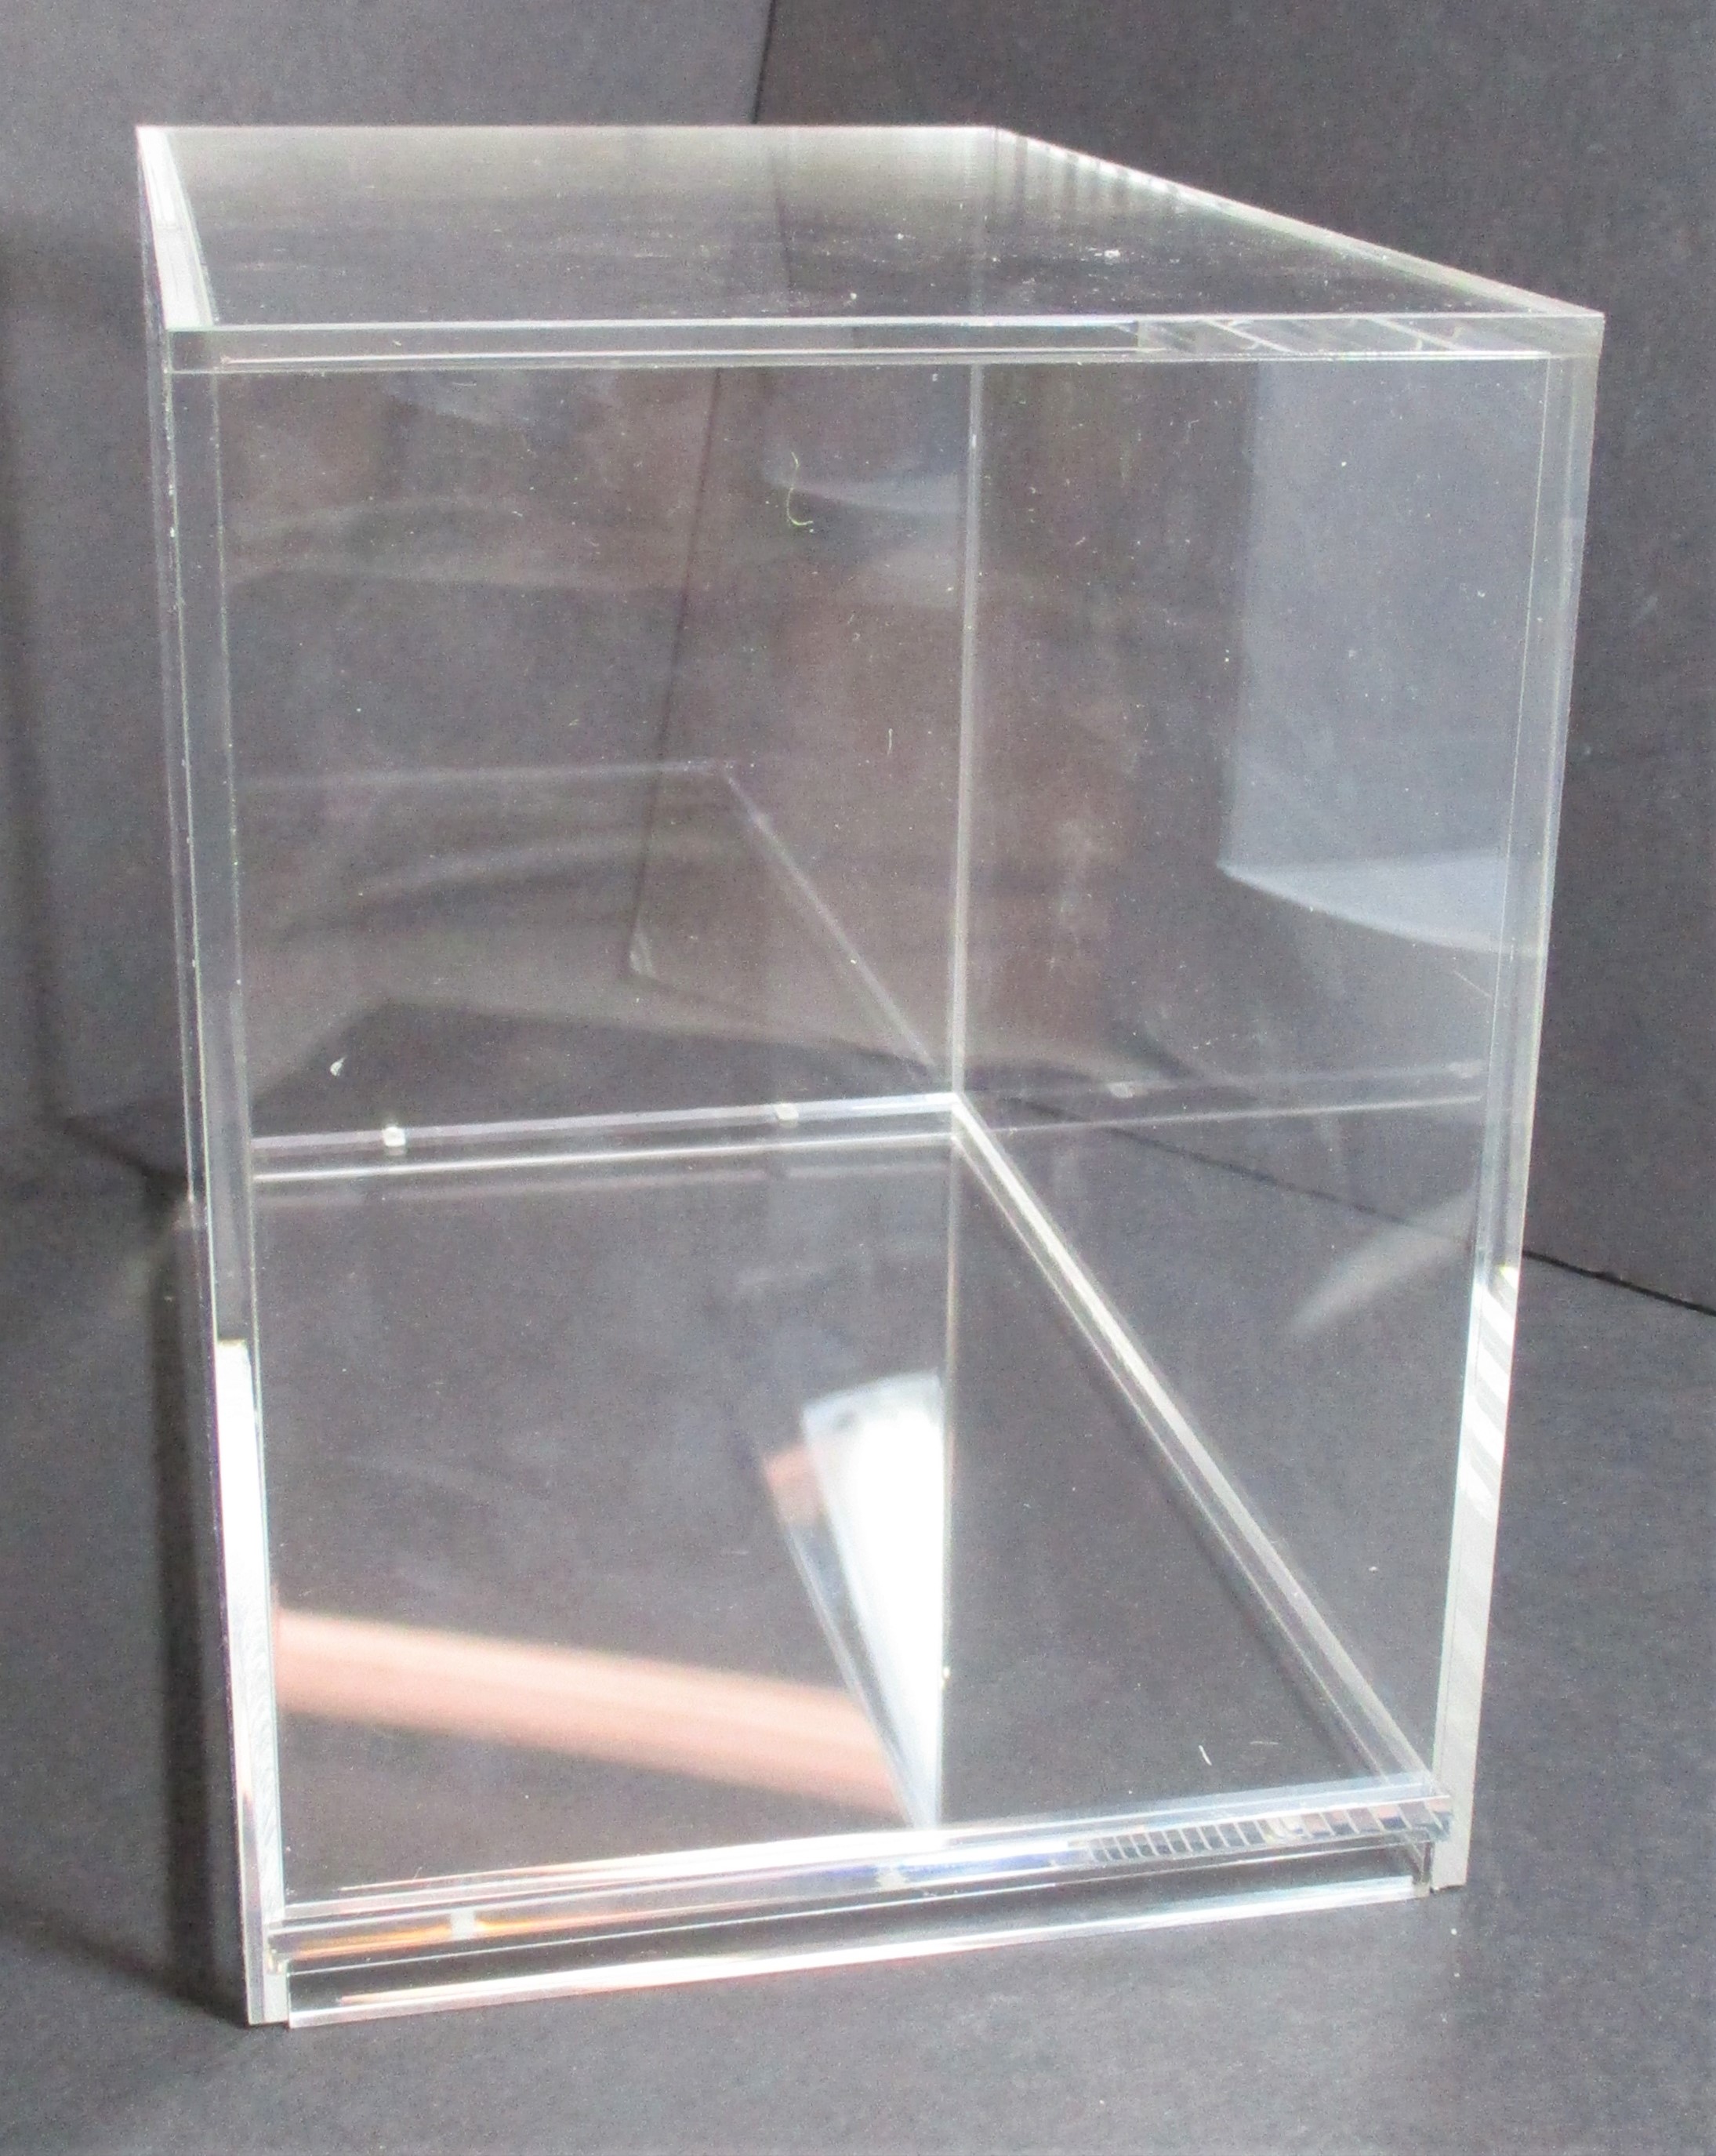 5x Pokemon Preconstructed Box 8 Deck Acrylic Display Guard (60031)